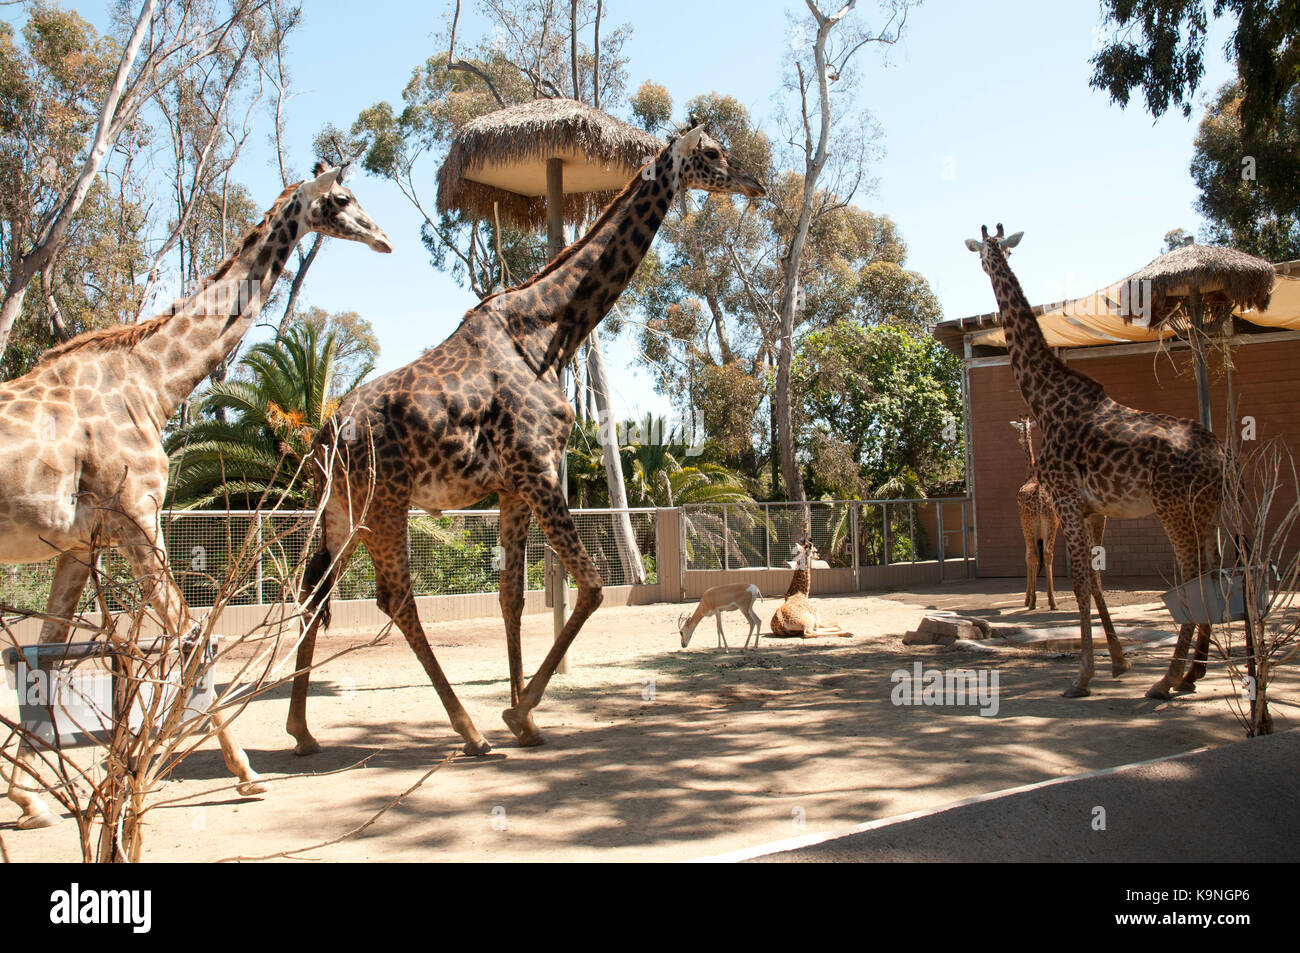 Giraffes at San Diego Zoo, Balboa Park, California, USA Stock Photo